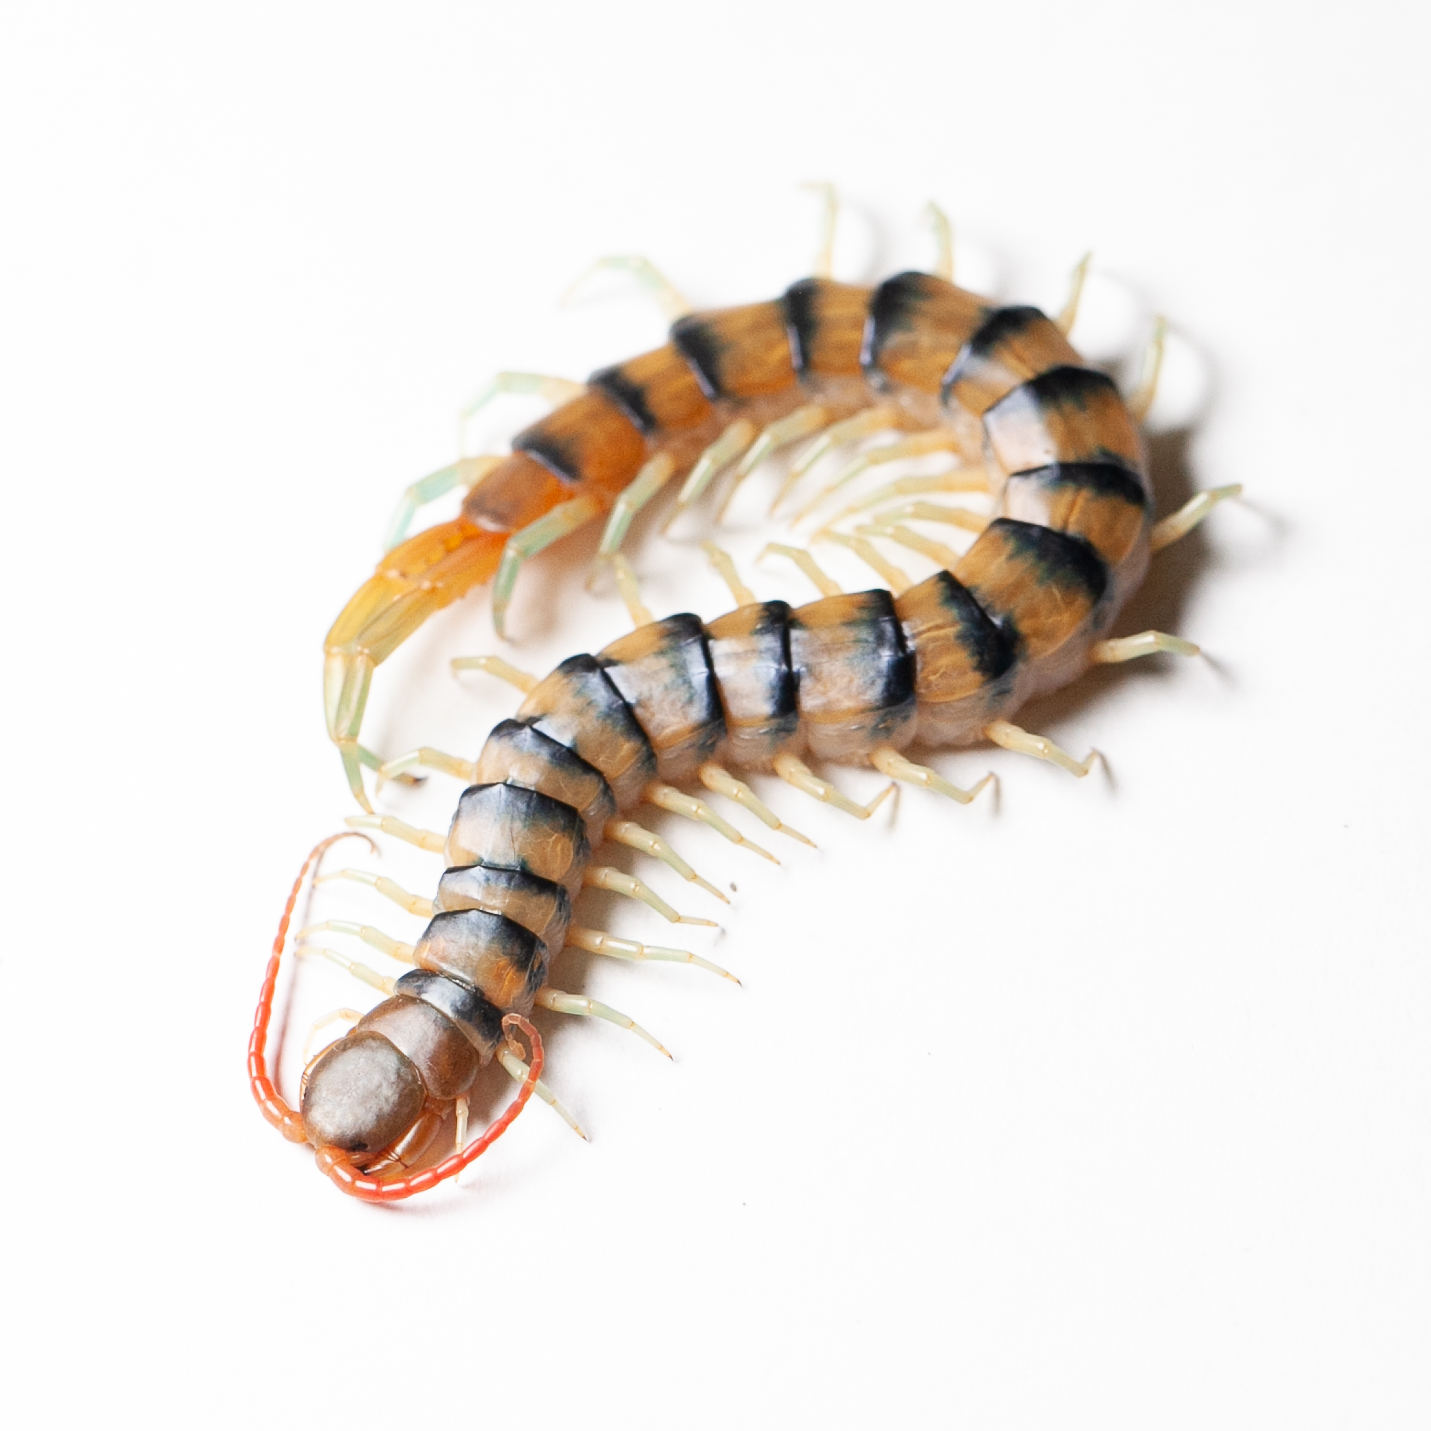 red-headed centipede